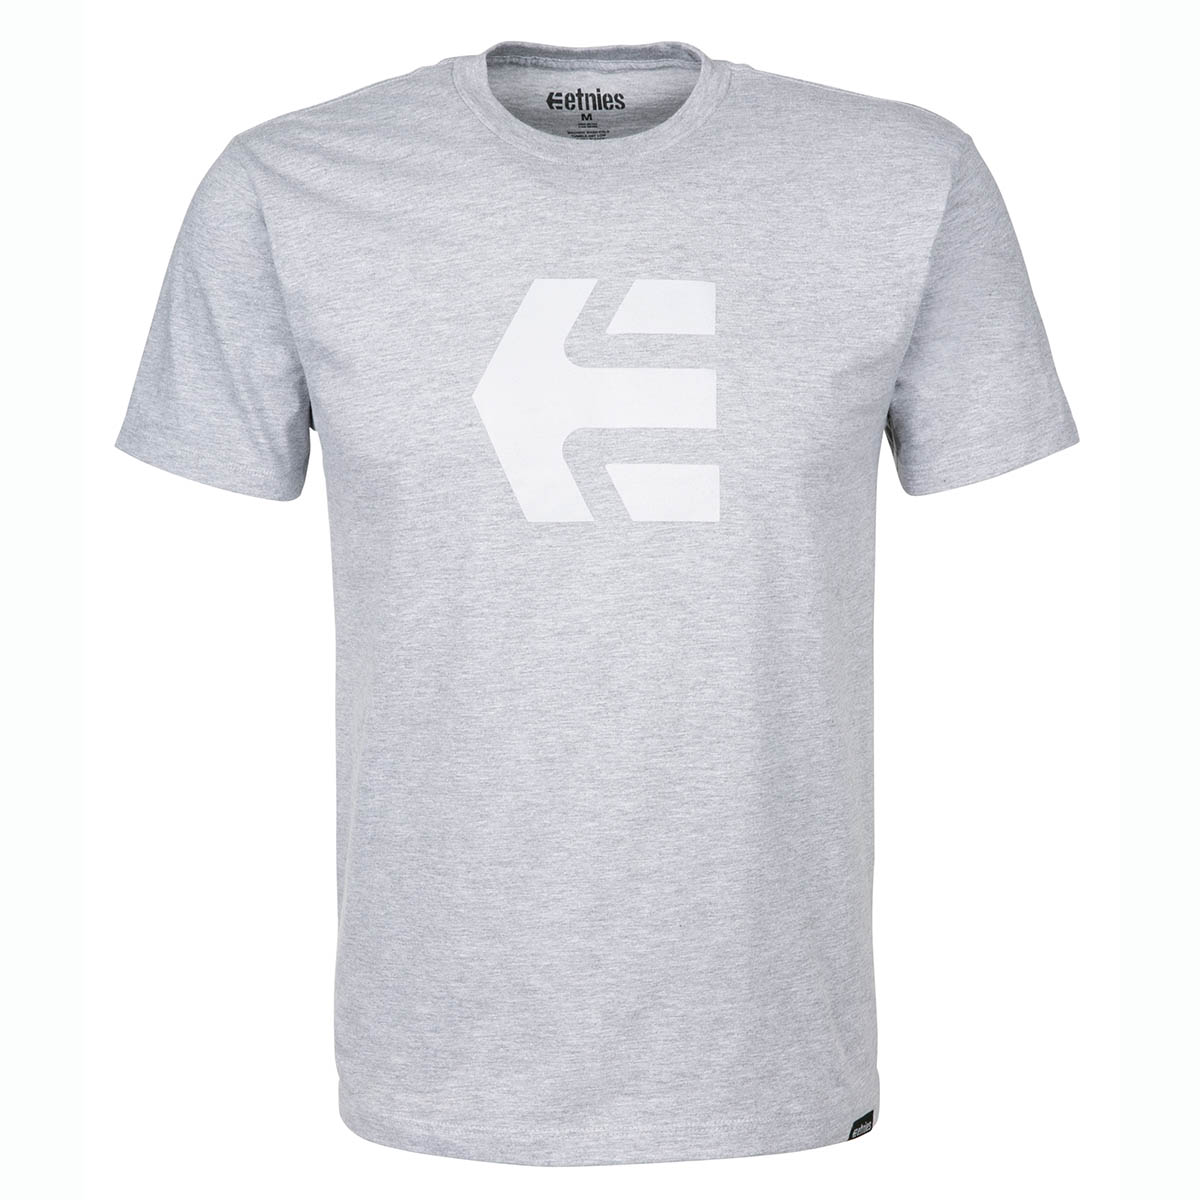 Etnies T-Shirt Mod Icon Grau/Heather